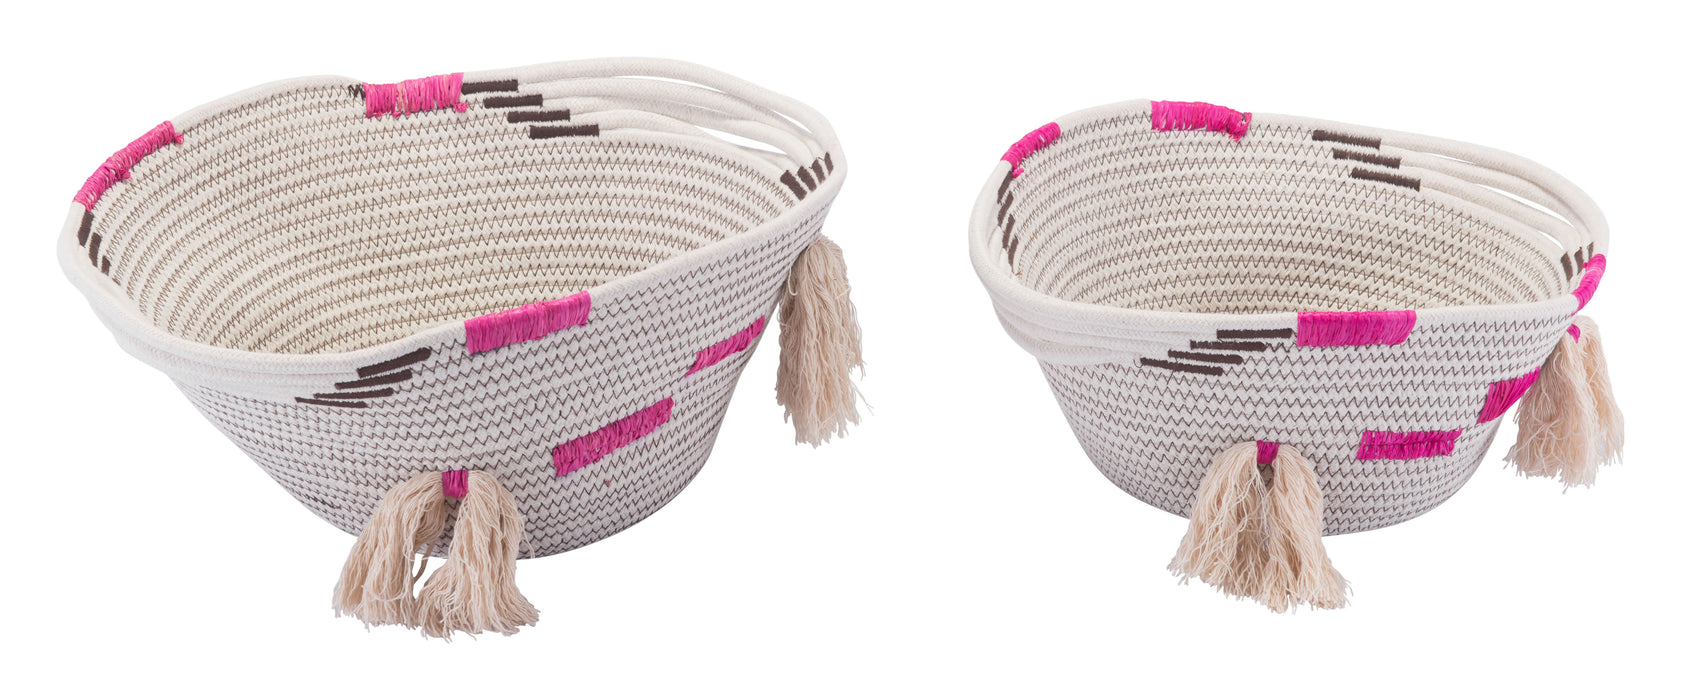 Benin Baskets With Handles (Set Of 2) Multicolor